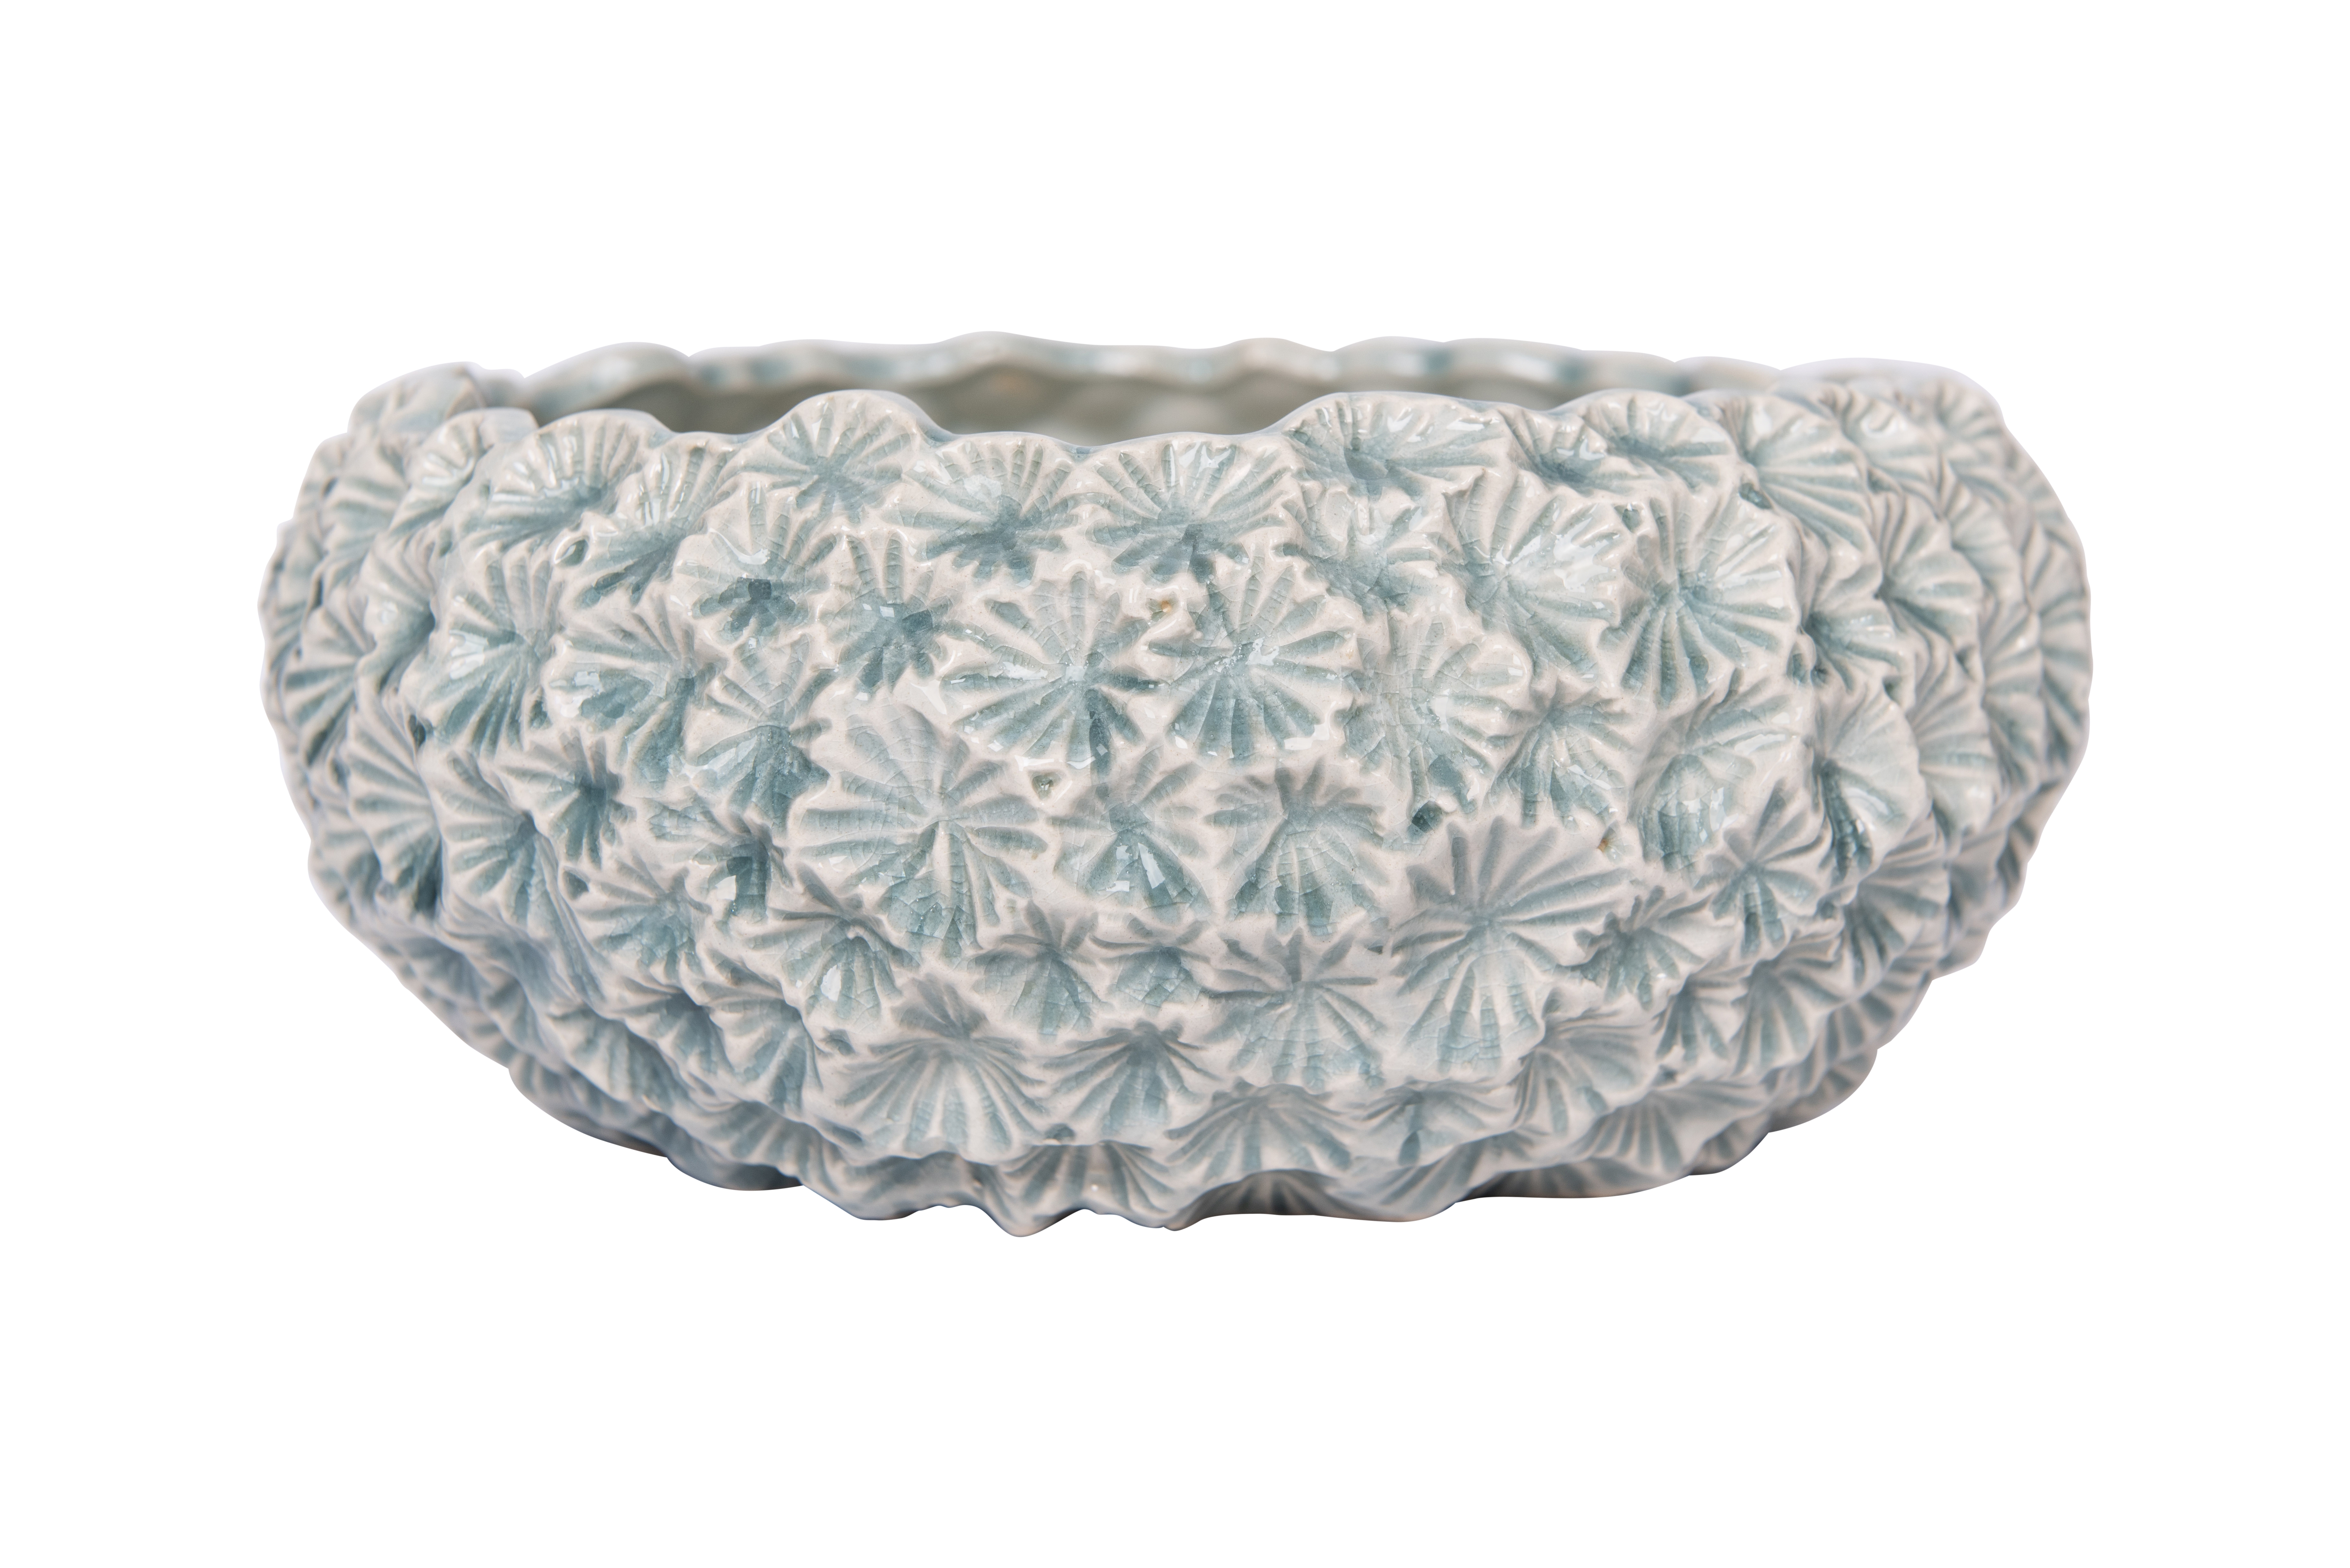 Light Blue Ceramic Planter with Flower Texture - Image 0